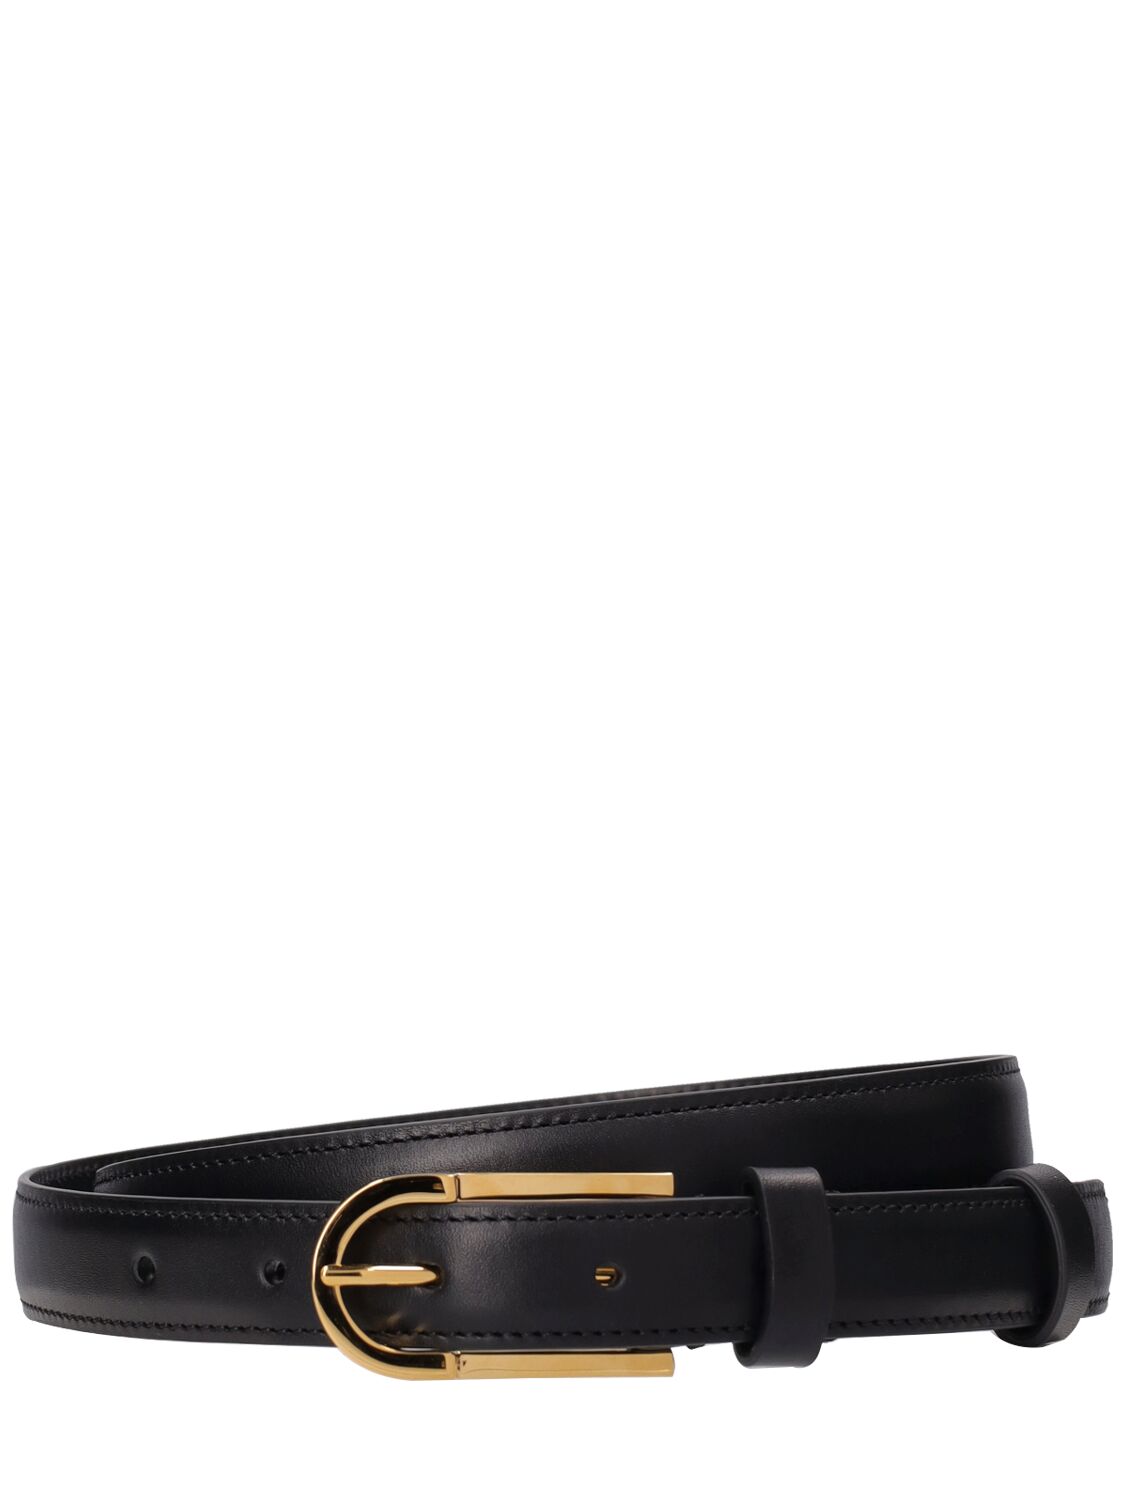 Image of Freya Leather Belt